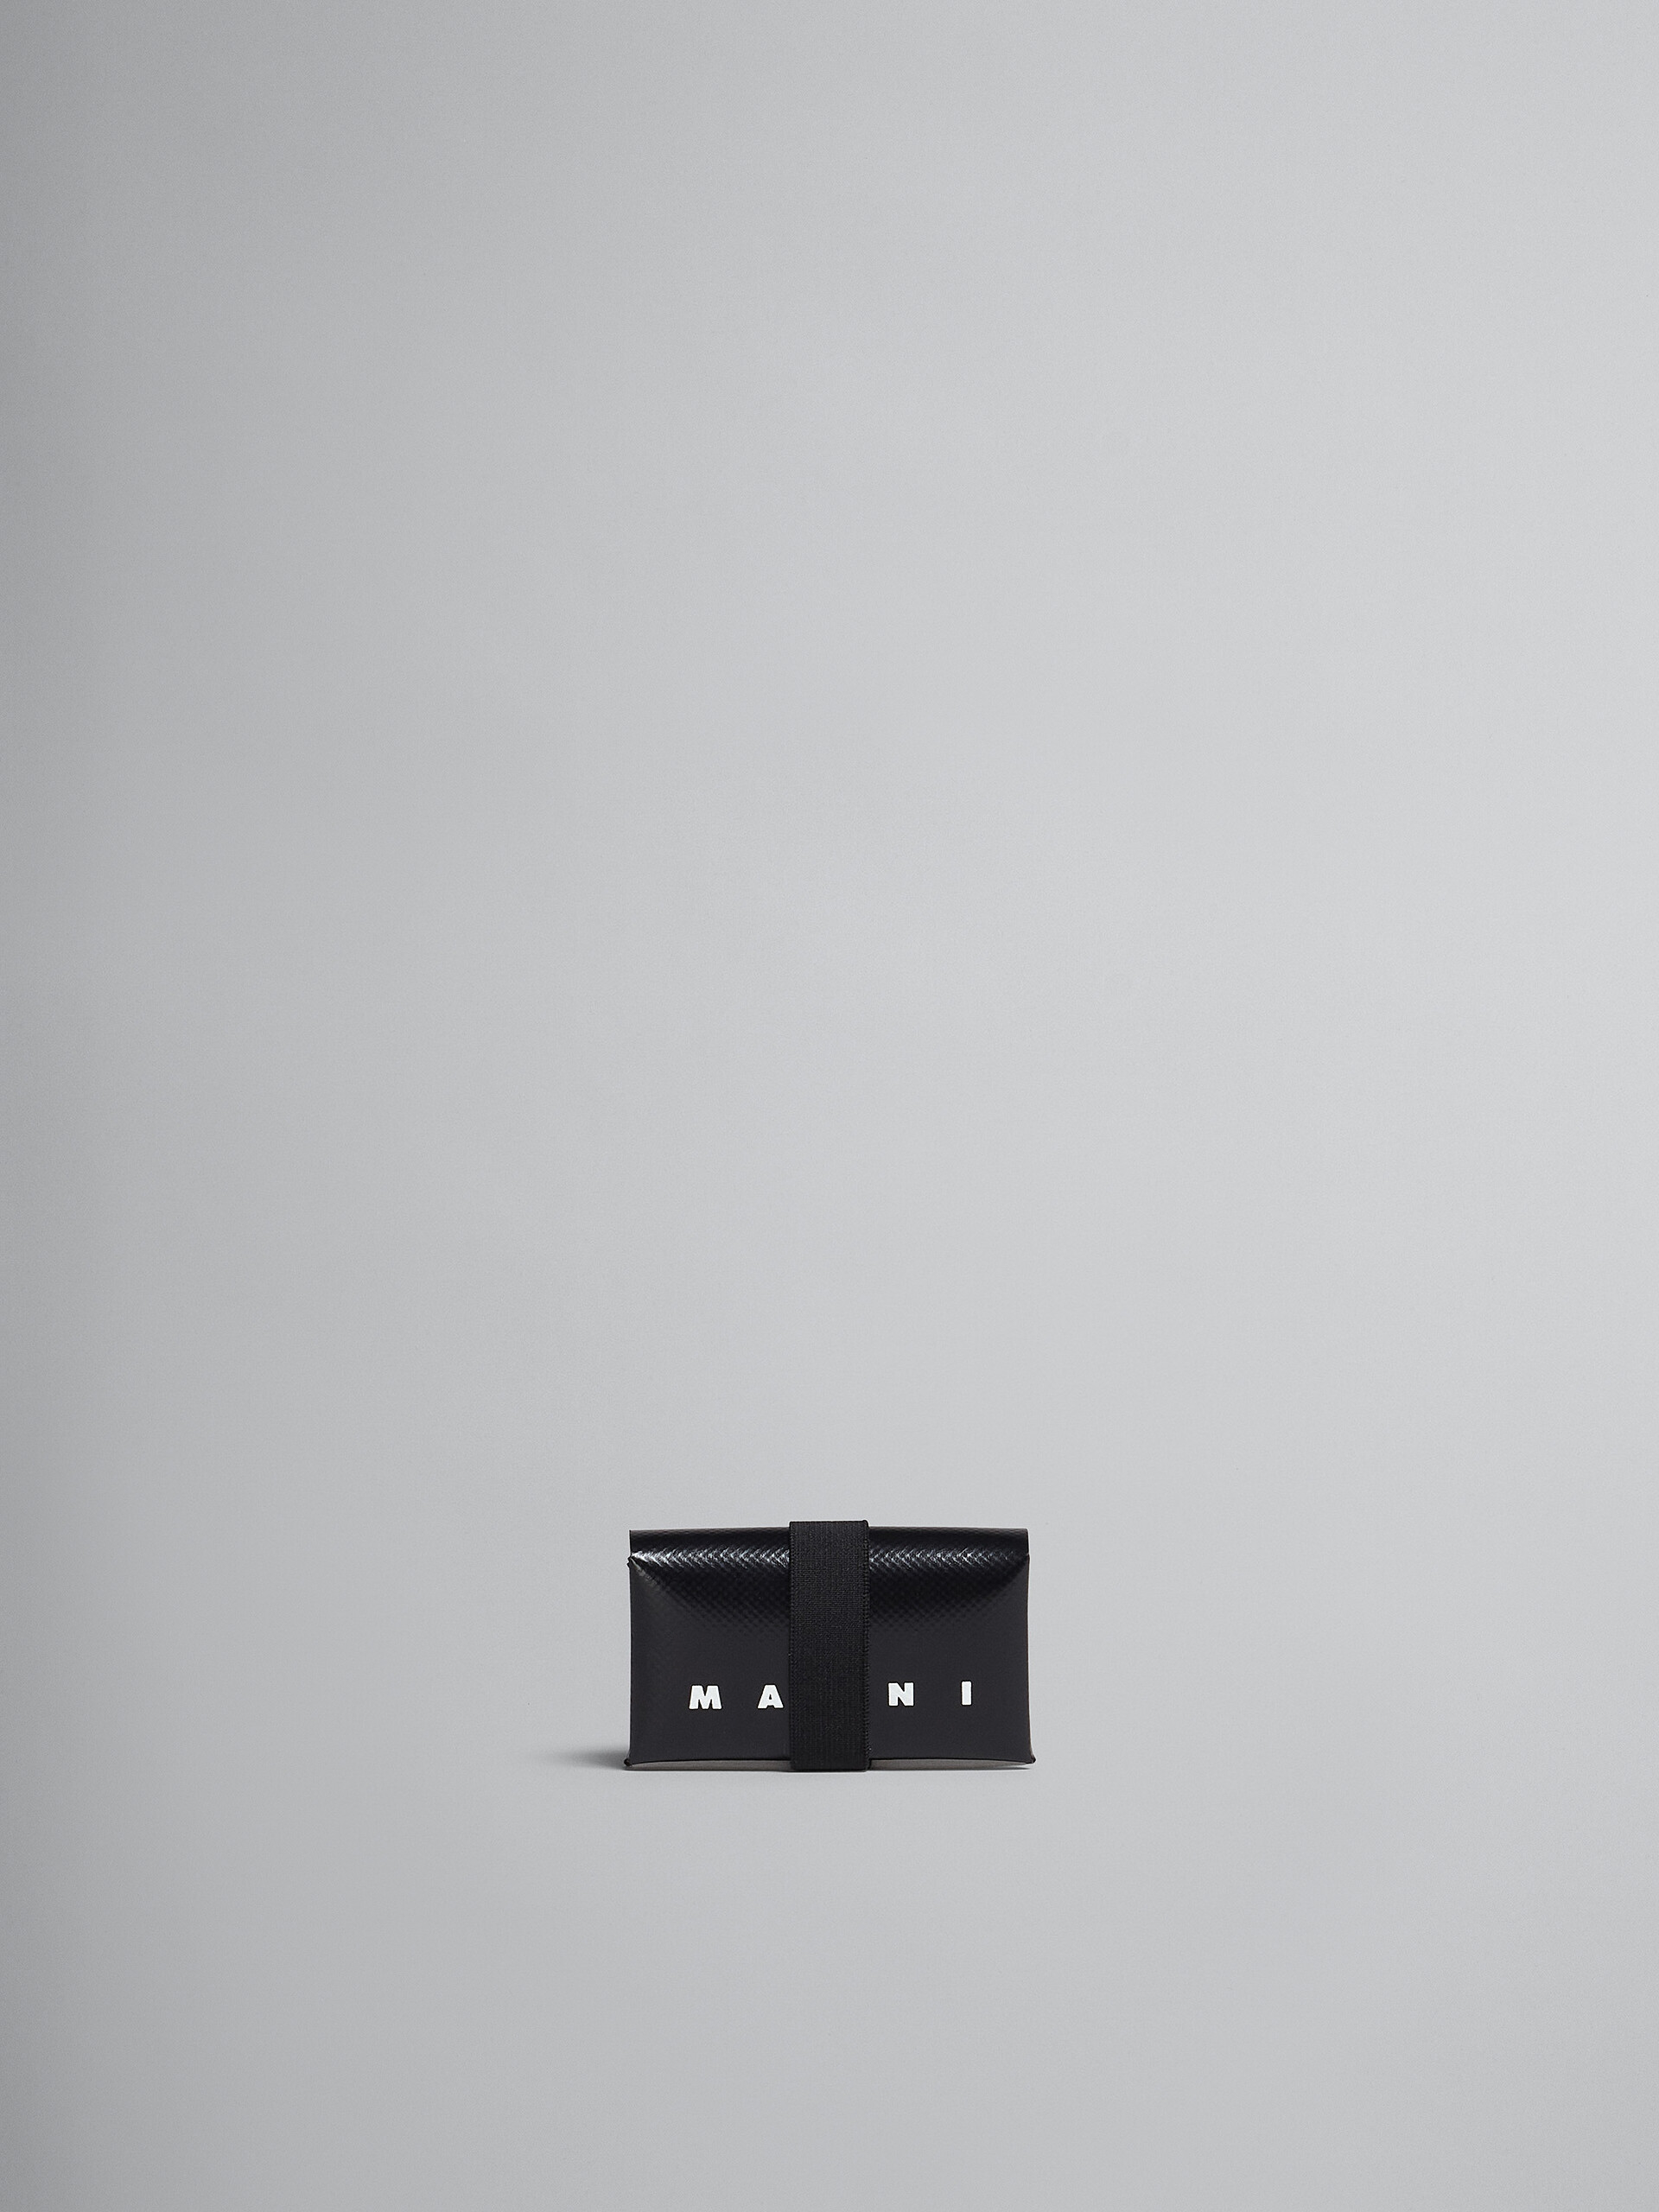 Portafoglio tri-fold nero - Portafogli - Image 1